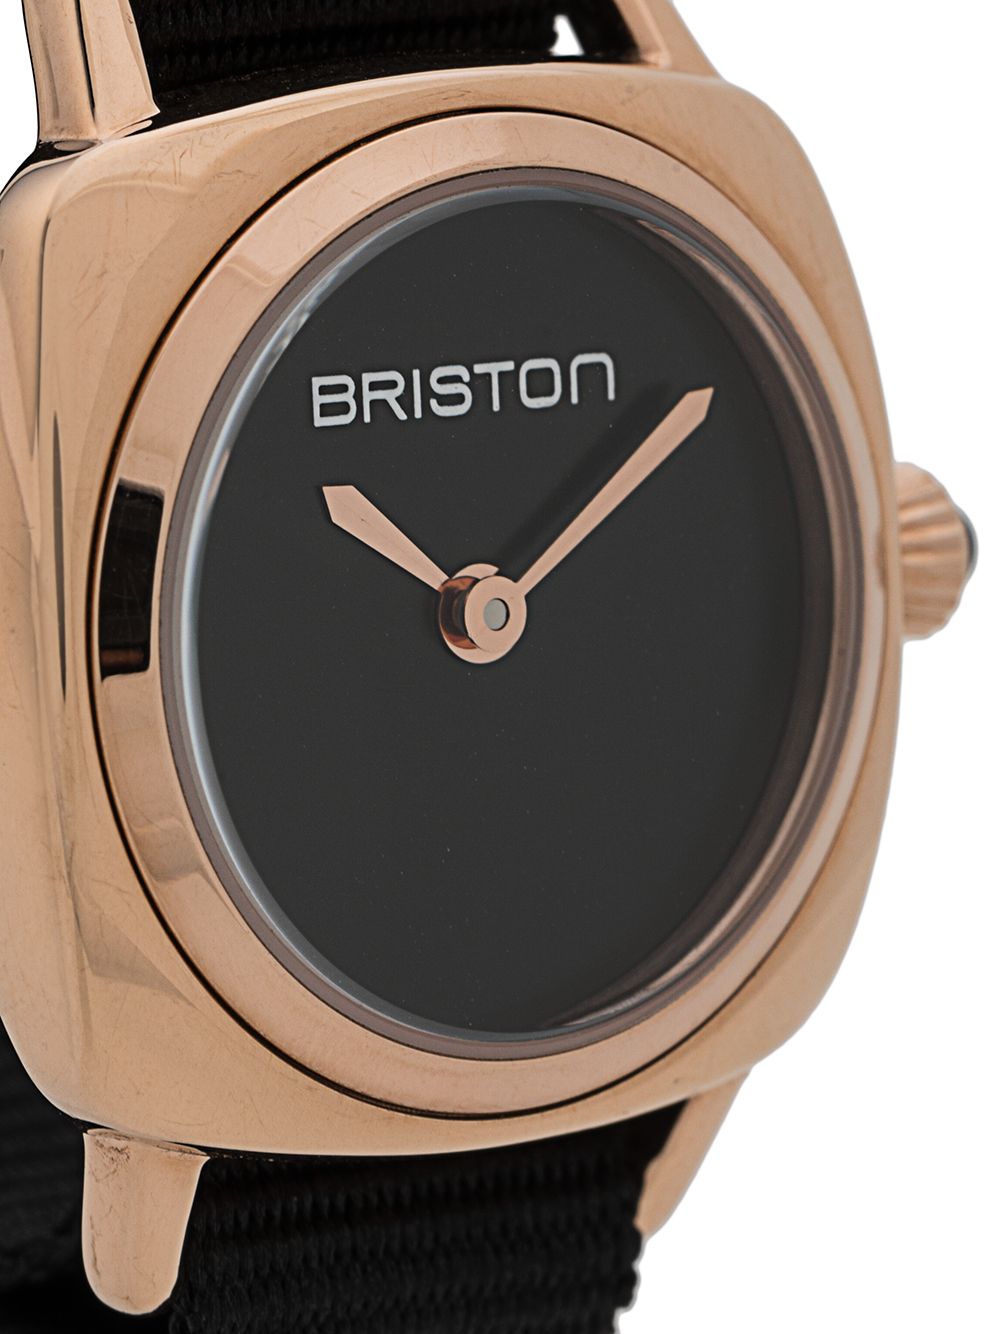 фото Briston Watches наручные часы Clubmaster